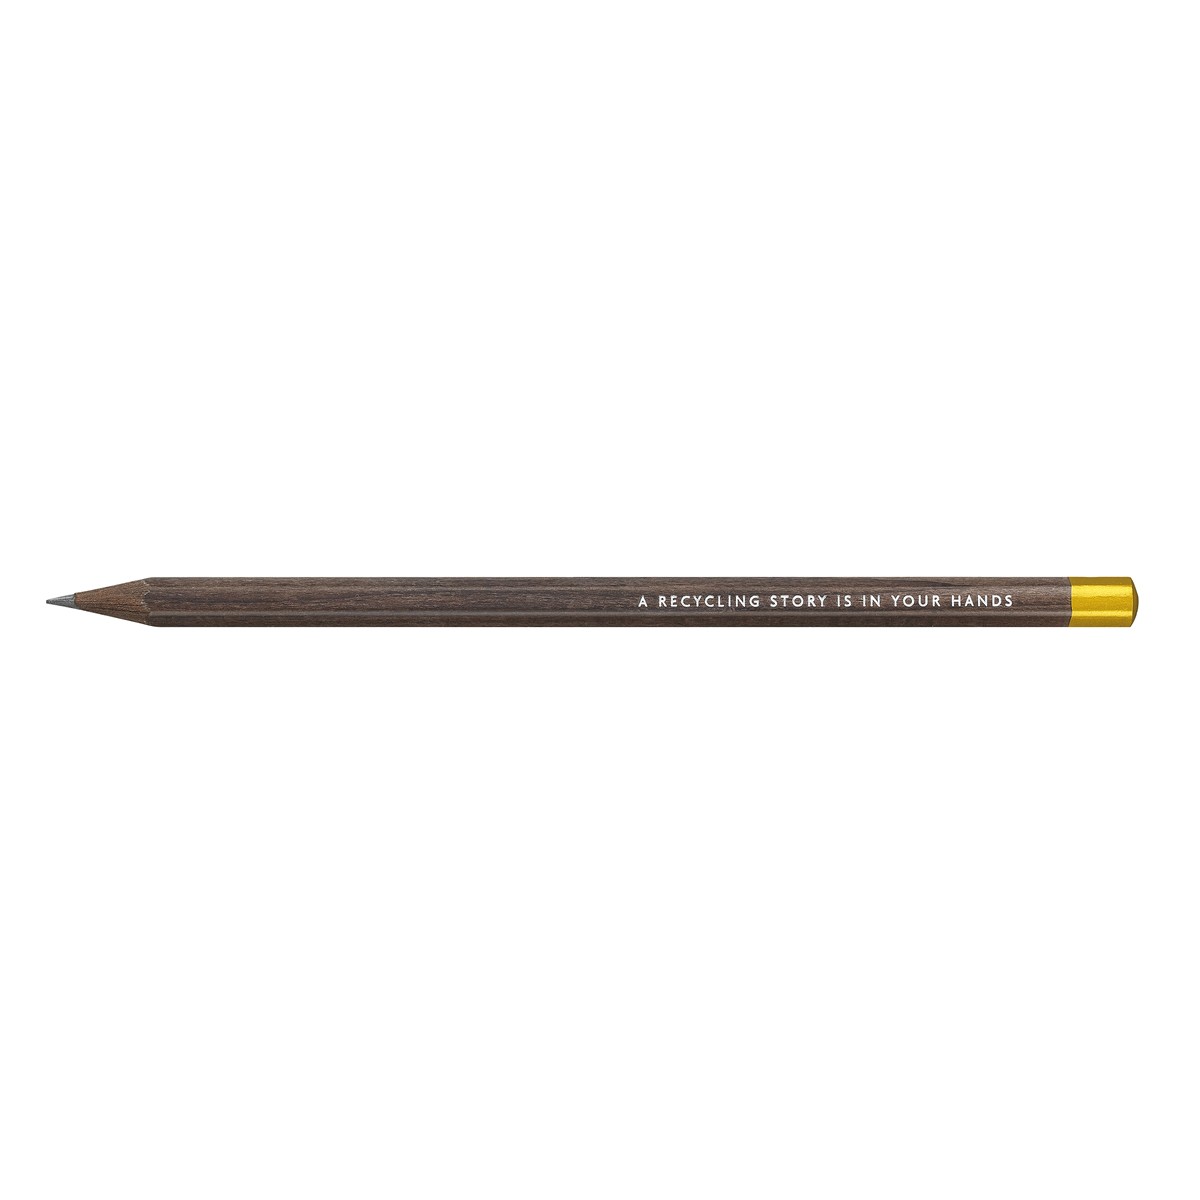 Caran d'Ache Set of 3 NESPRESSO SWISS WOOD Pencils – Limited Edition 4